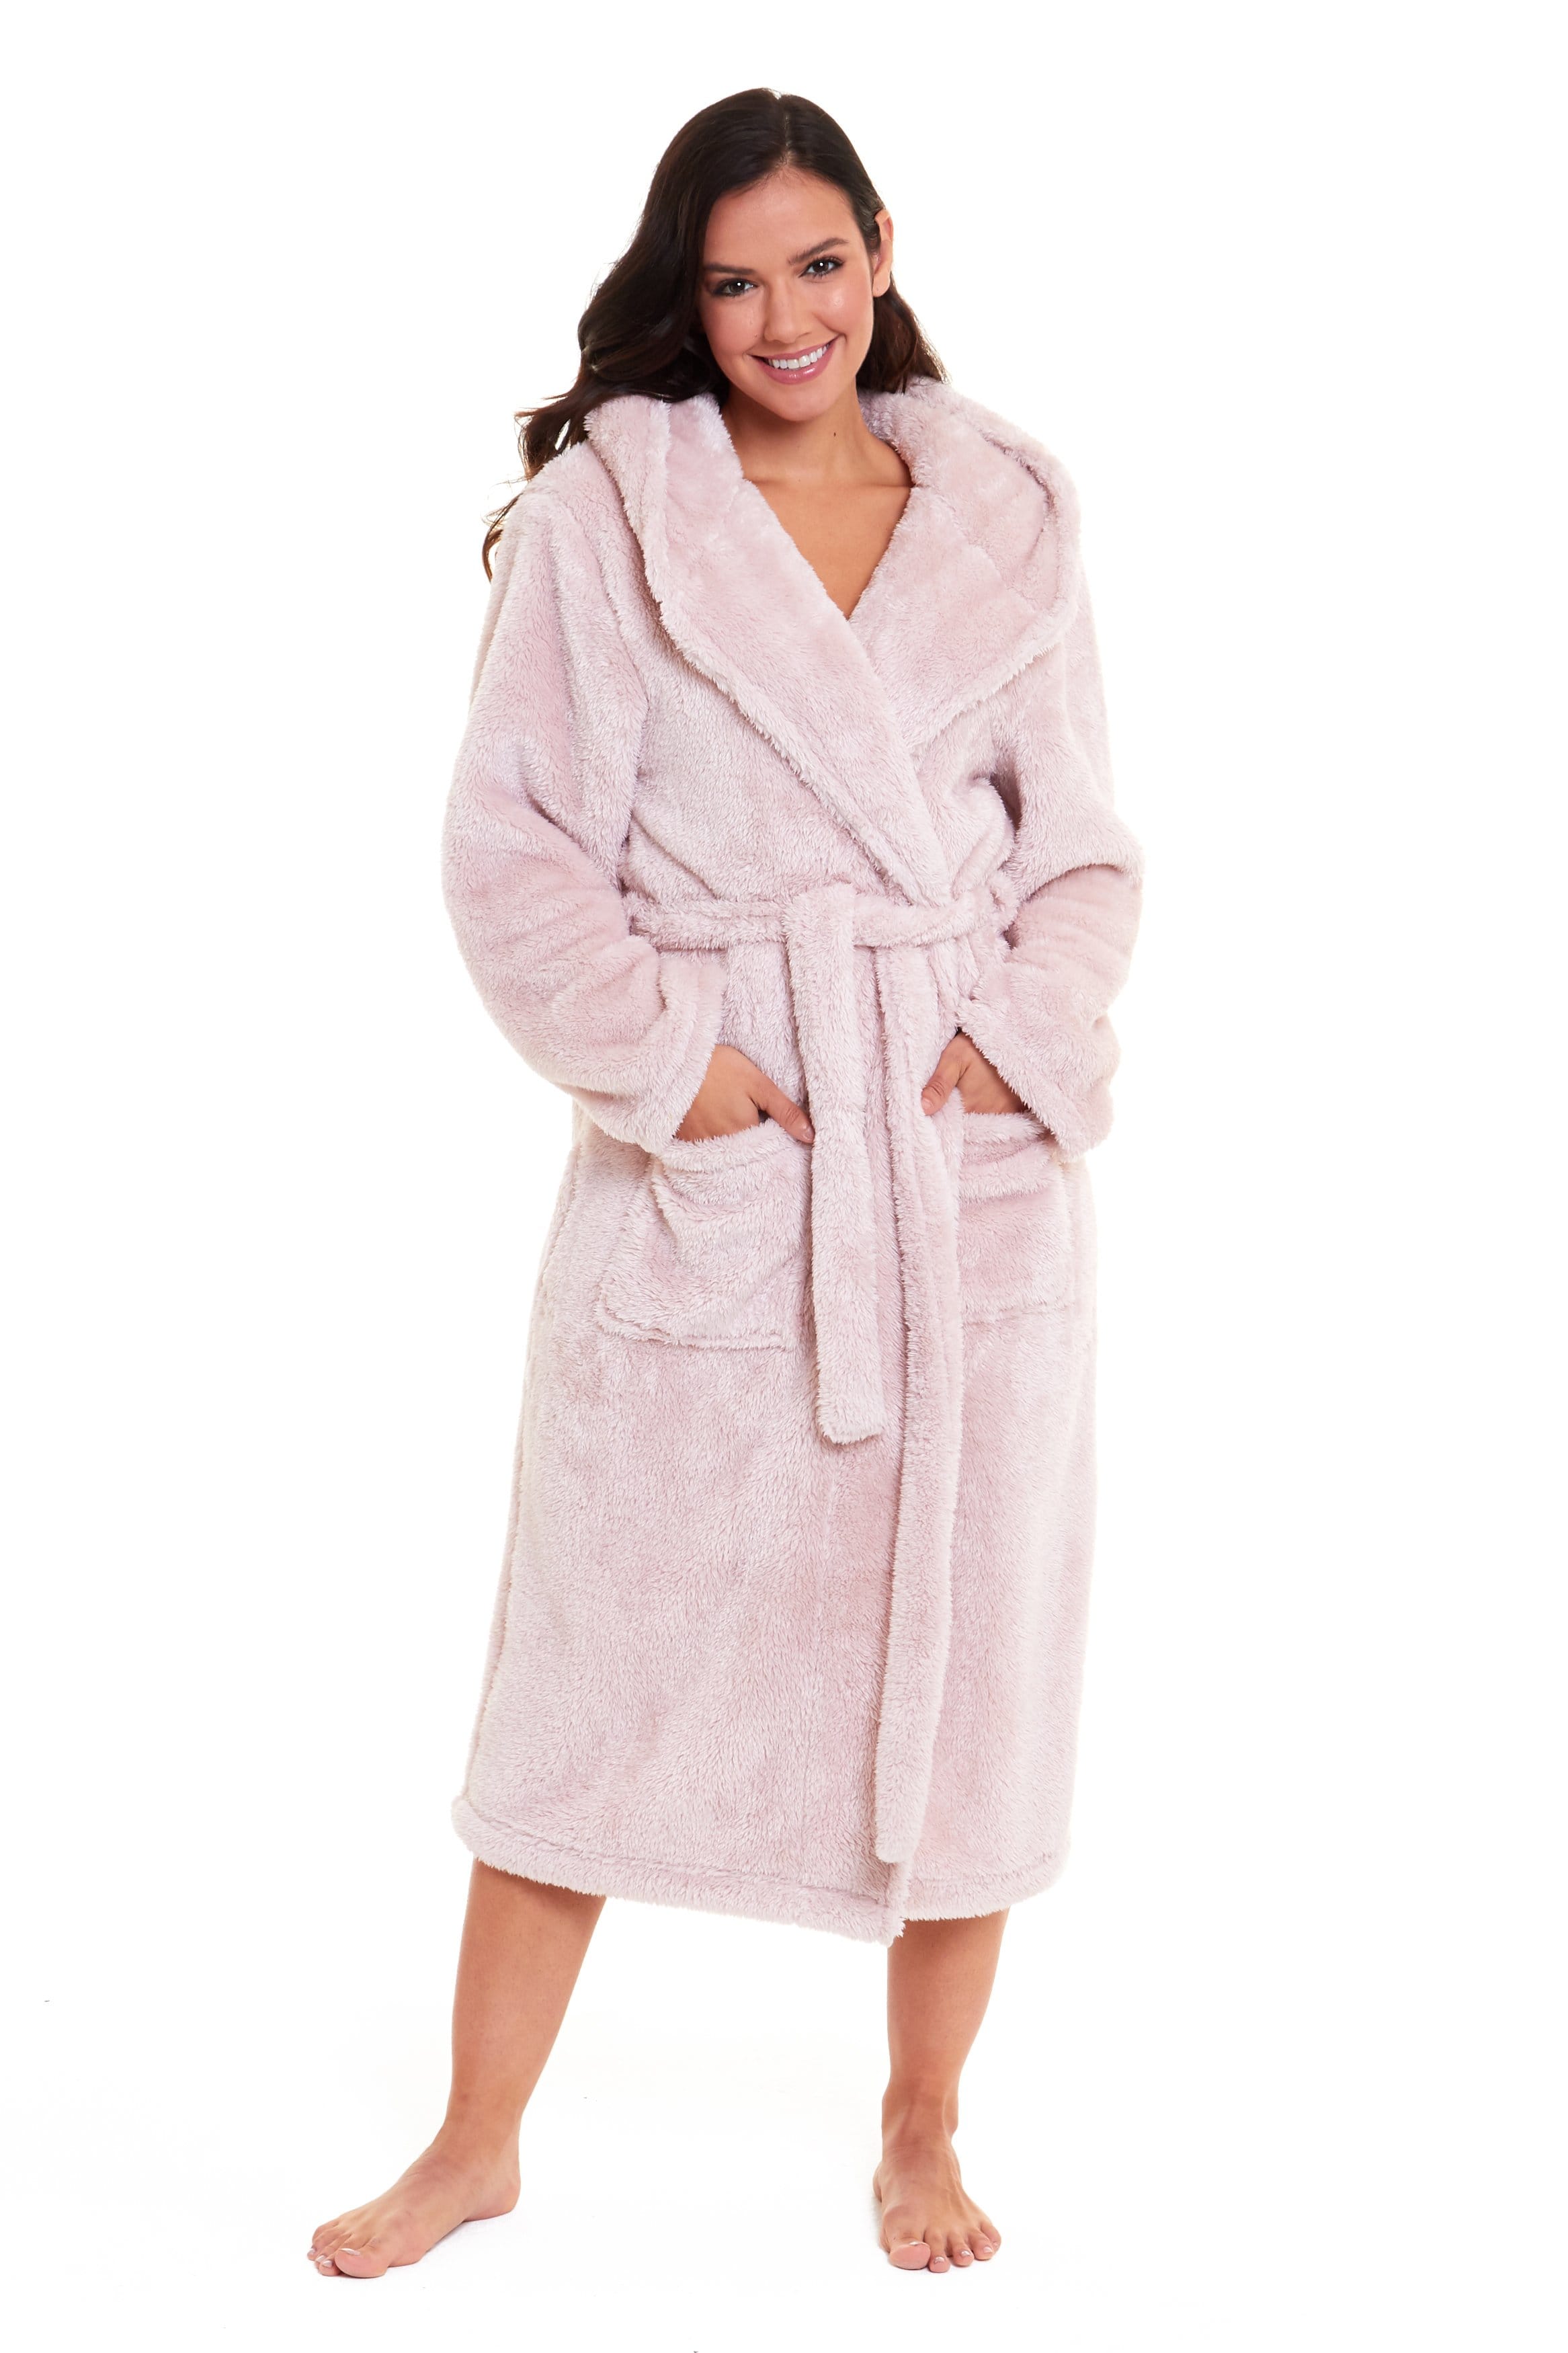 DOOWELL Women's Knit Robes Lightweight Absorbent Soft Spa Bathrobe at  Amazon Women's Clothing store